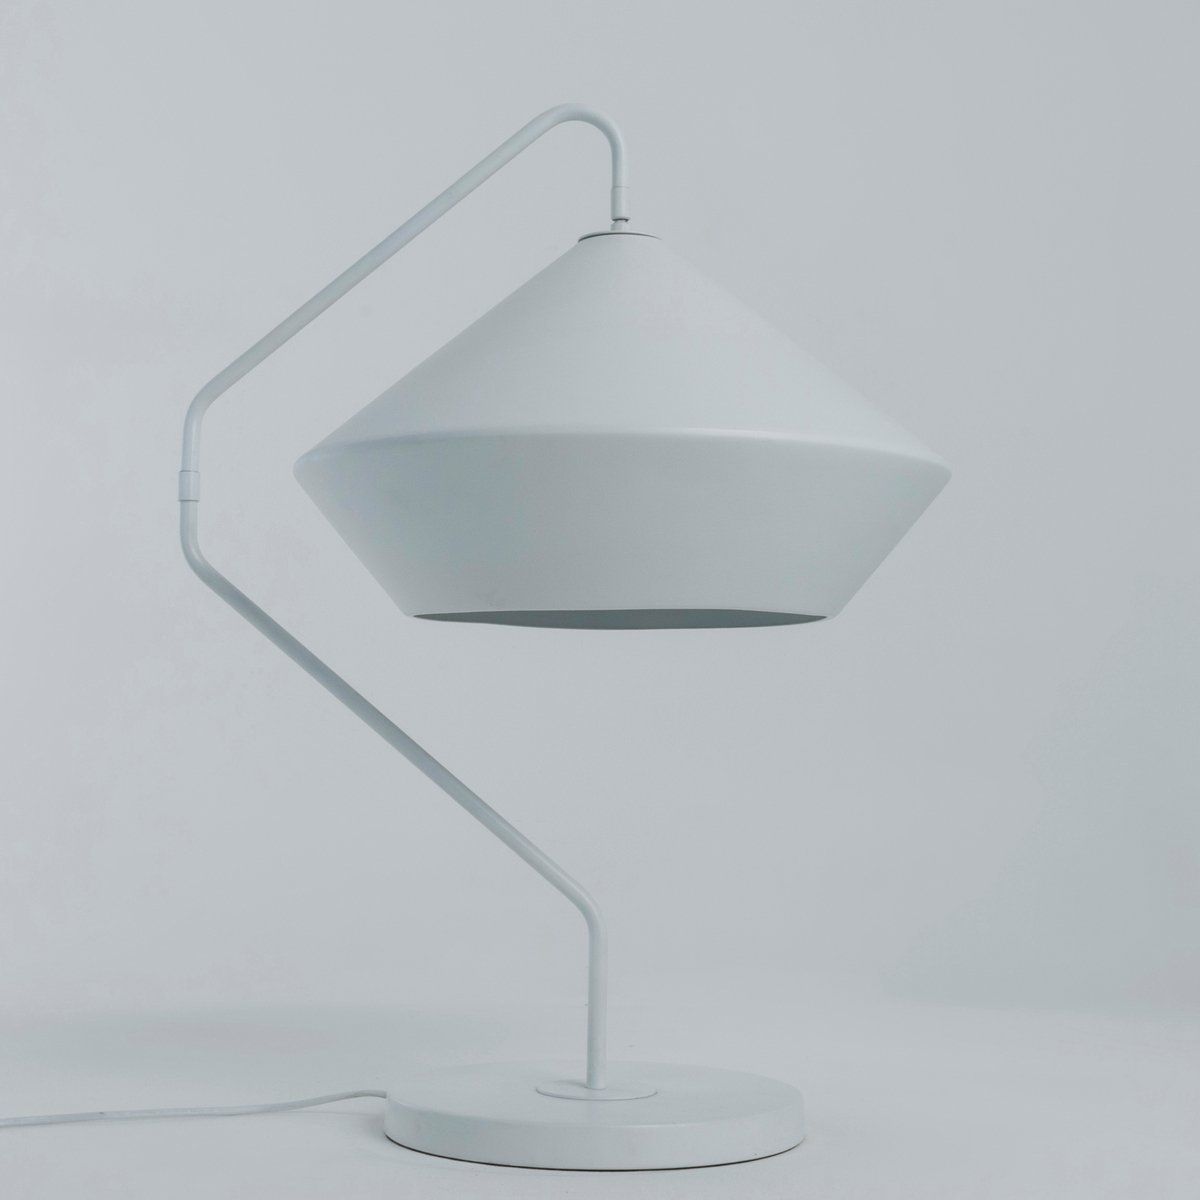 Lampe design SIGNATURE blanc mat en métal et aluminium